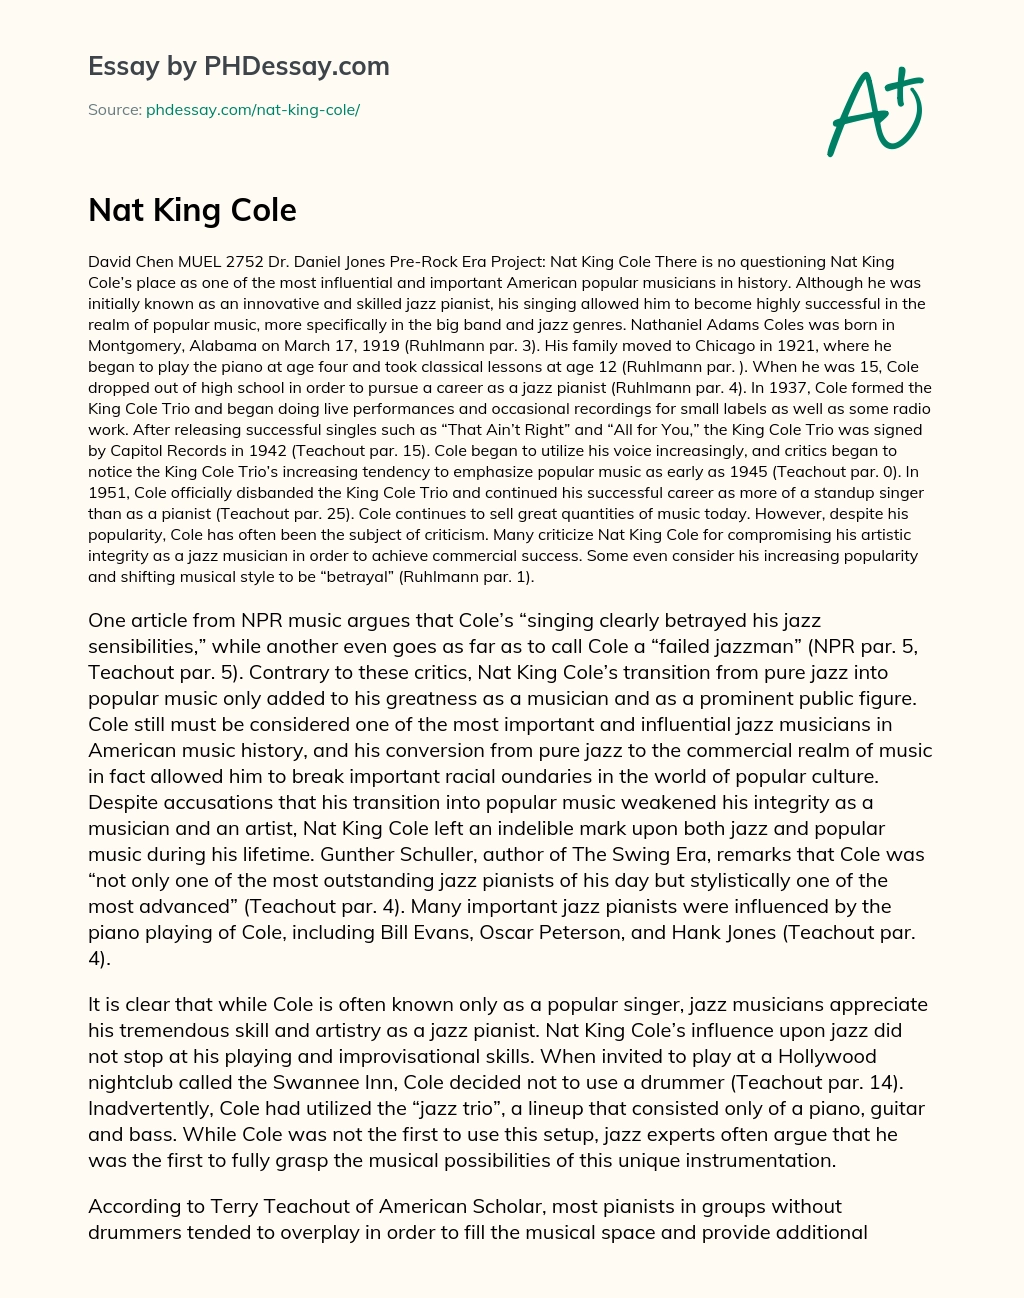 Nat King Cole essay